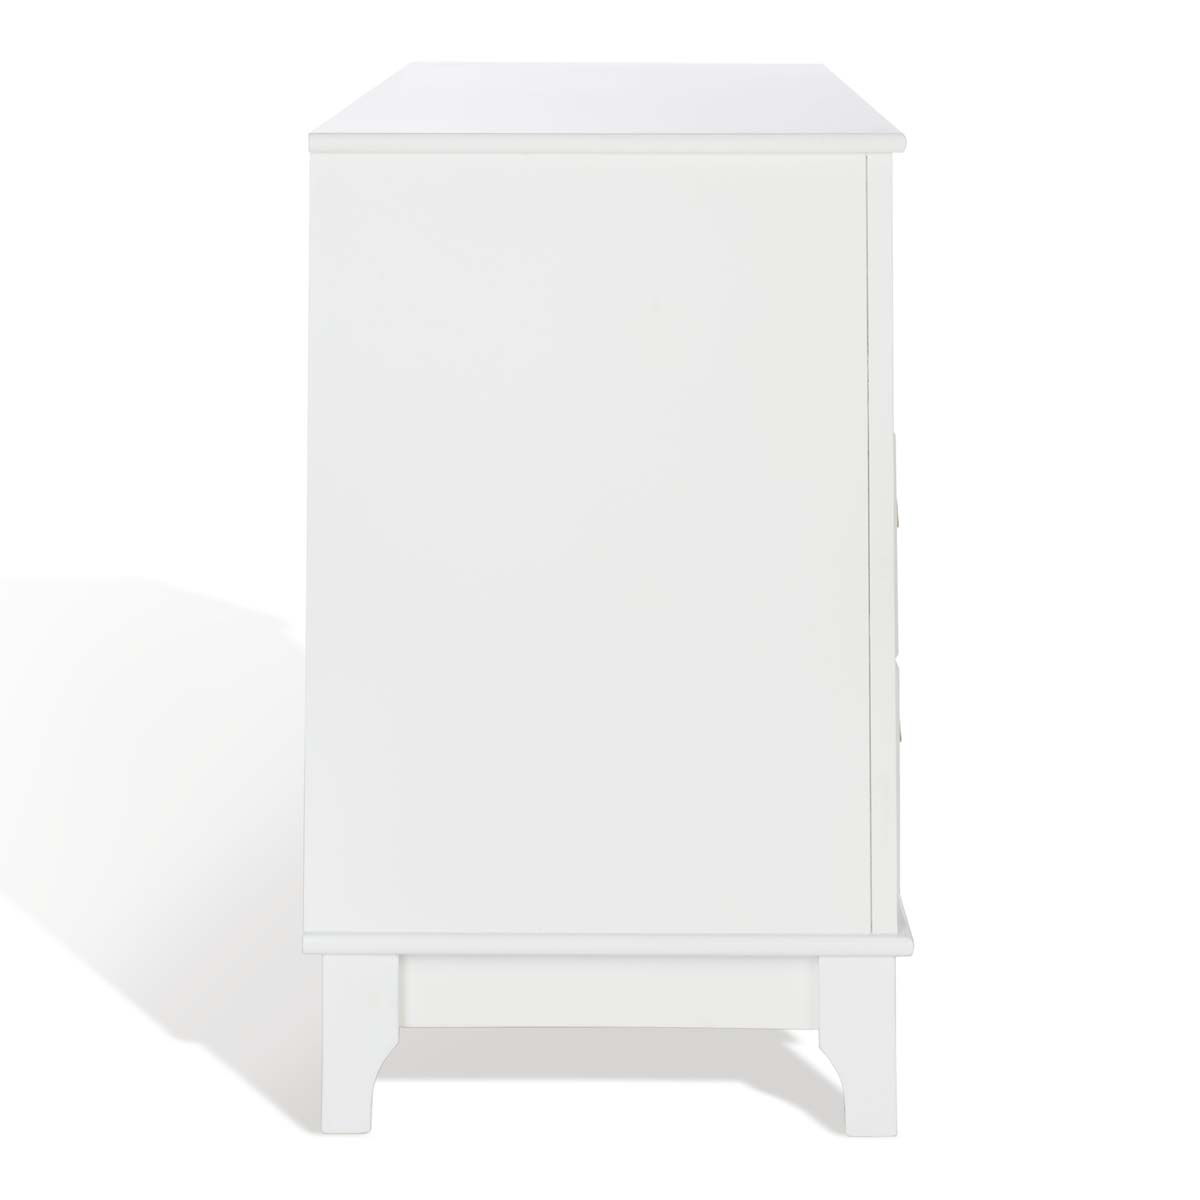 Safavieh Couture Hannon 6 Drawer Contemporary Dresser - White / Gold